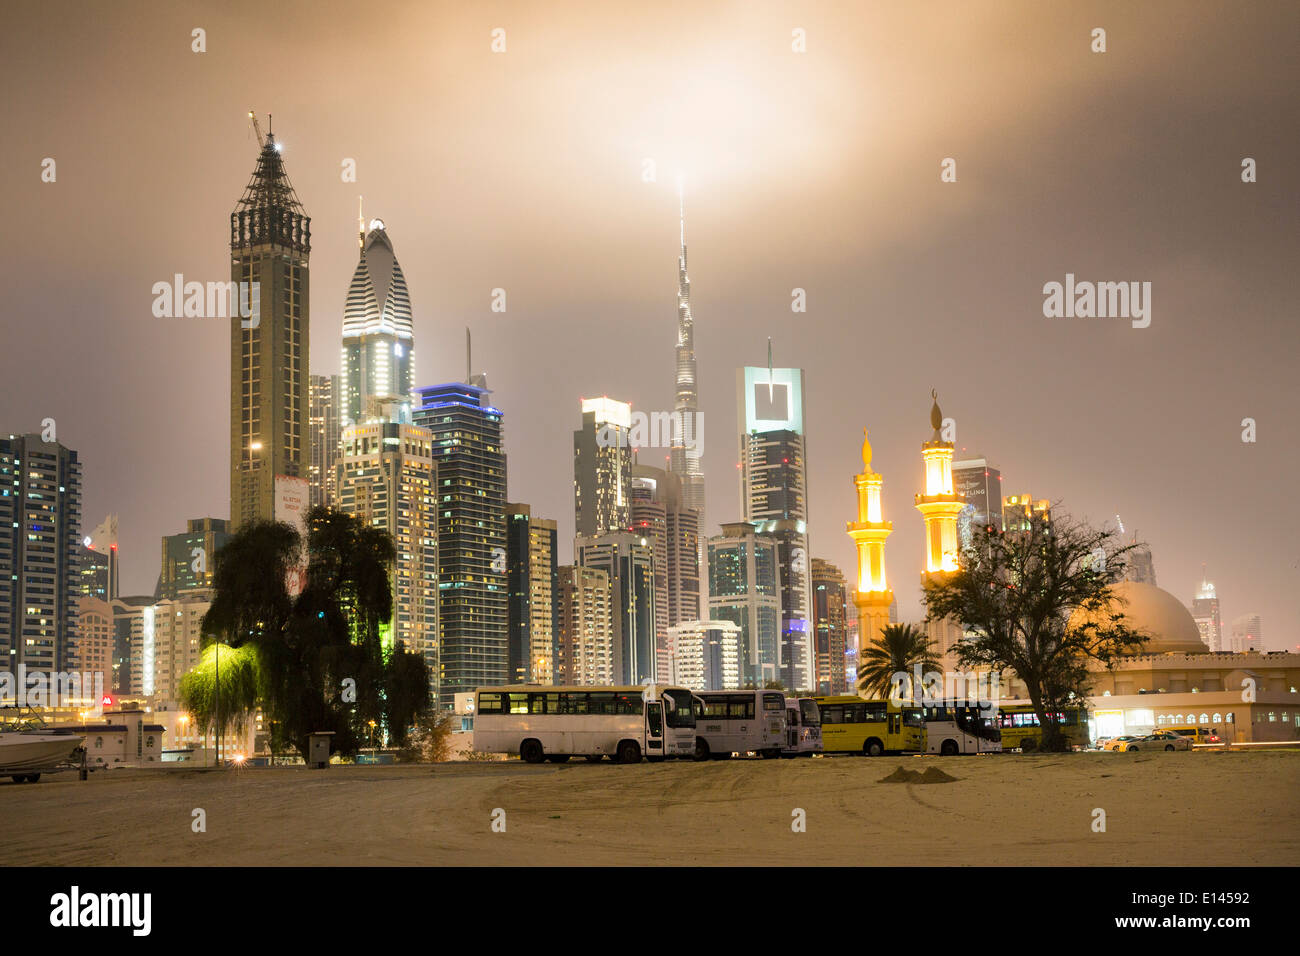 United Arab Emirates, Dubai, Financial city center skyline with Burj Khalifa, highest building in the world. Mosque. Twilight Stock Photo